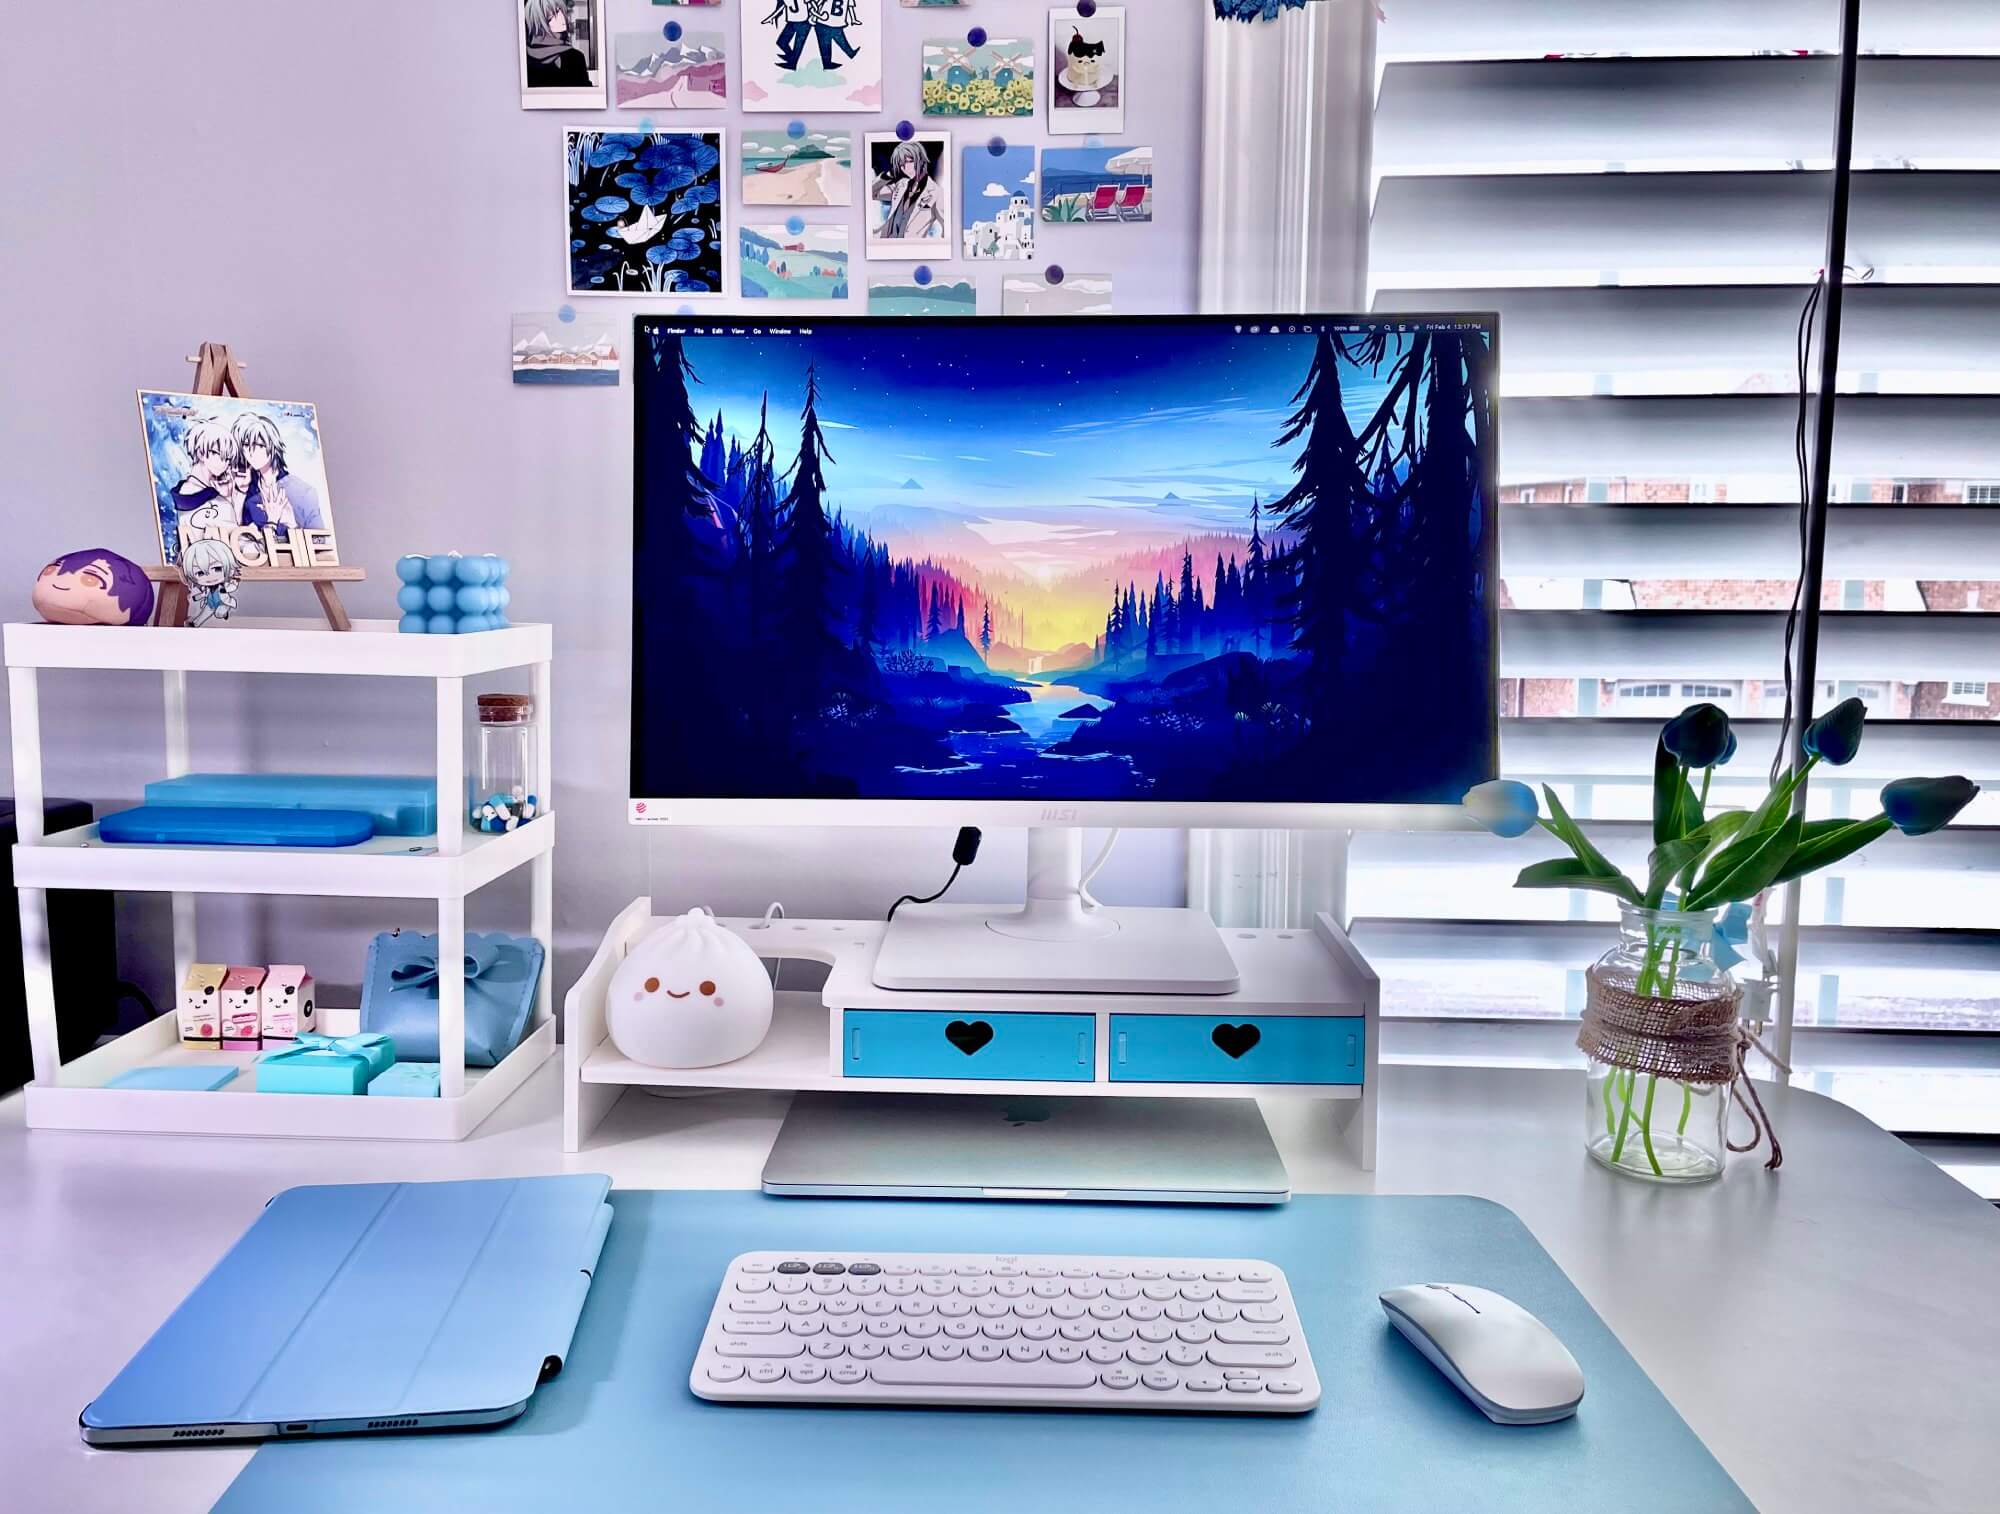 A cute desk setup with a MSI MD241PW monitor